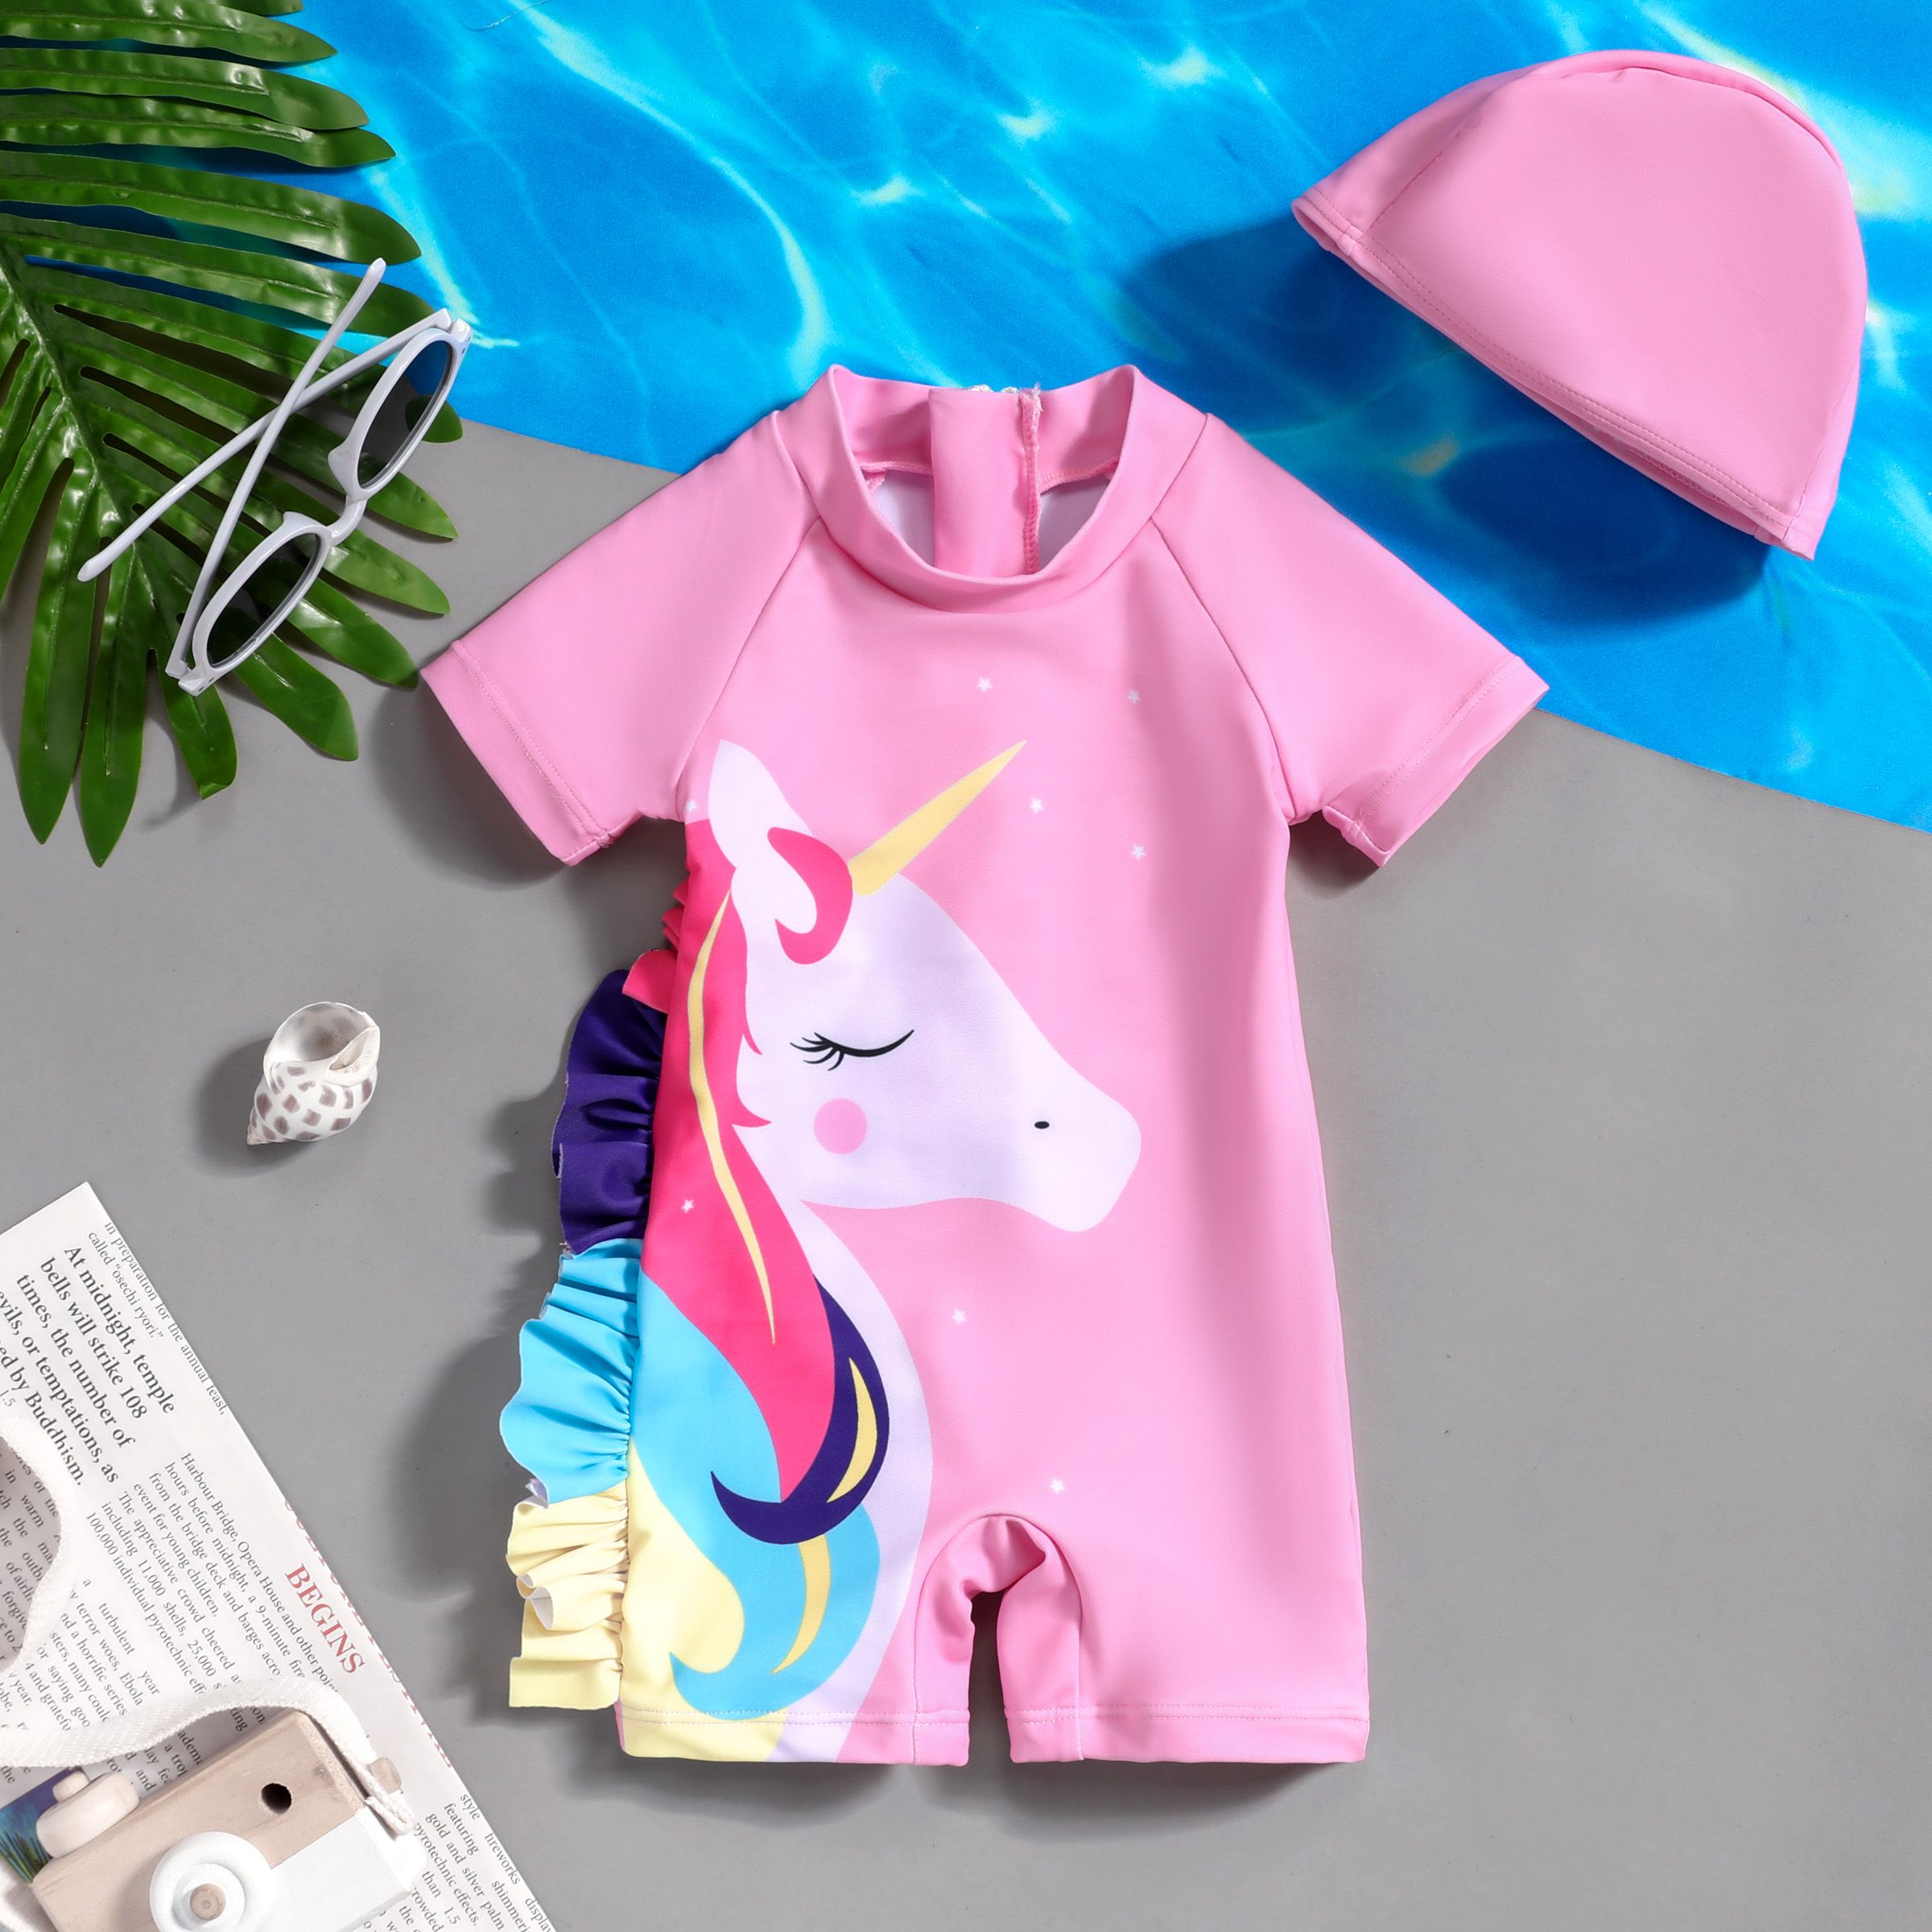 2pcs Childlike Pink Unicorn One piece Swimsuit with Ruffle Edge and Hat Set